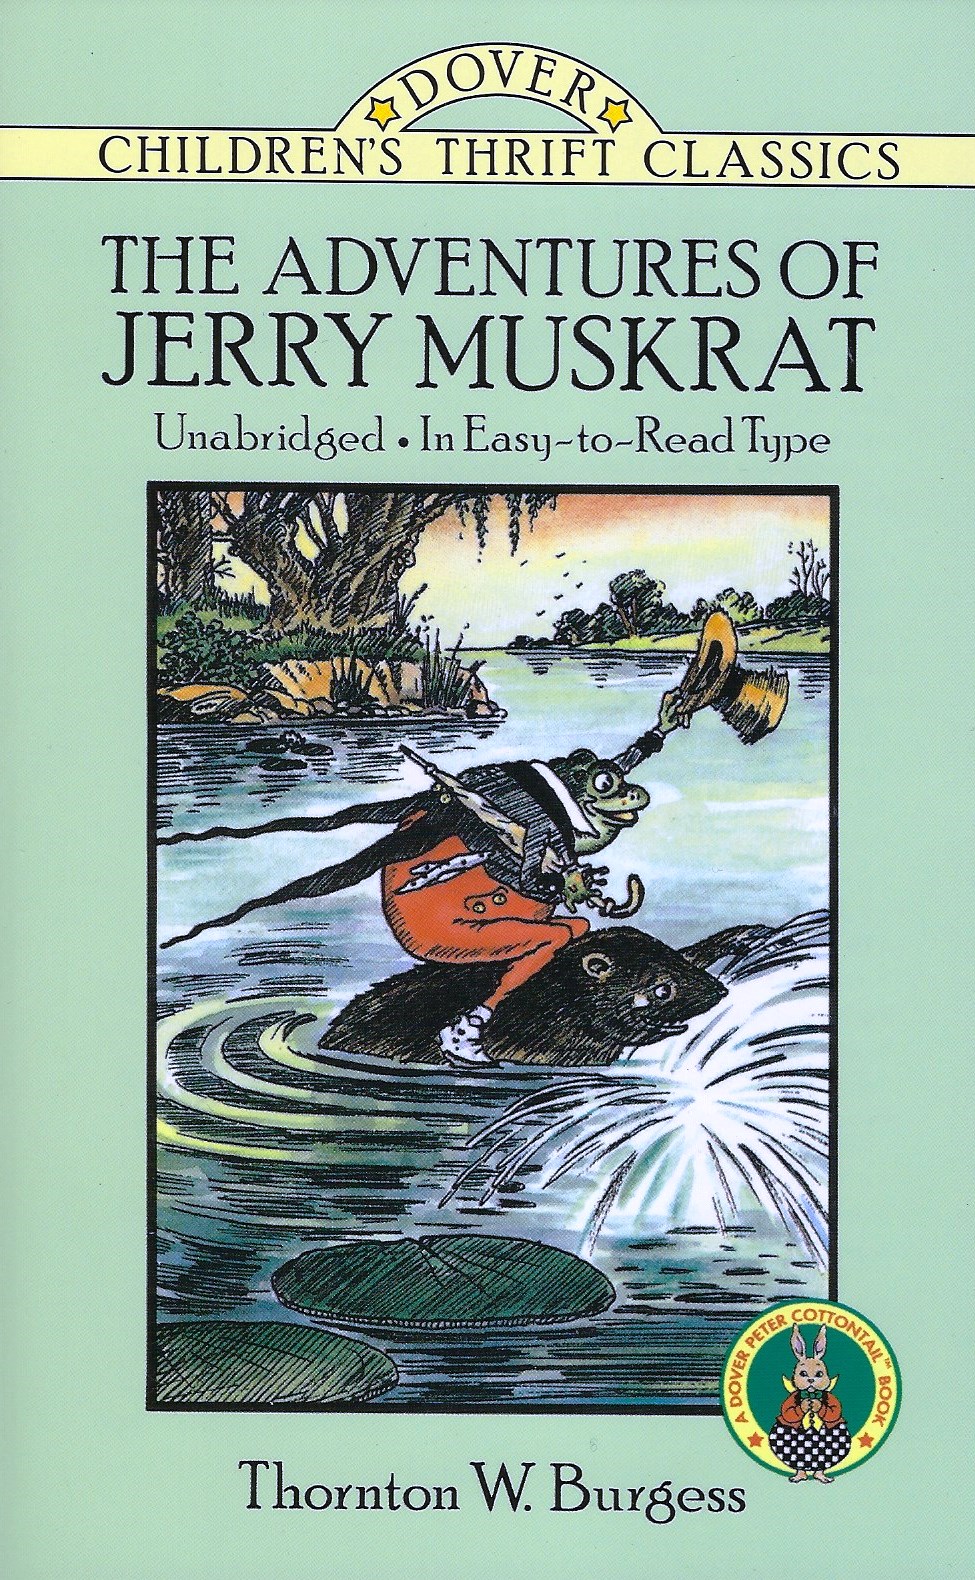 THE ADVENTURES OF JERRY MUSKRAT Thornton W. Burgess